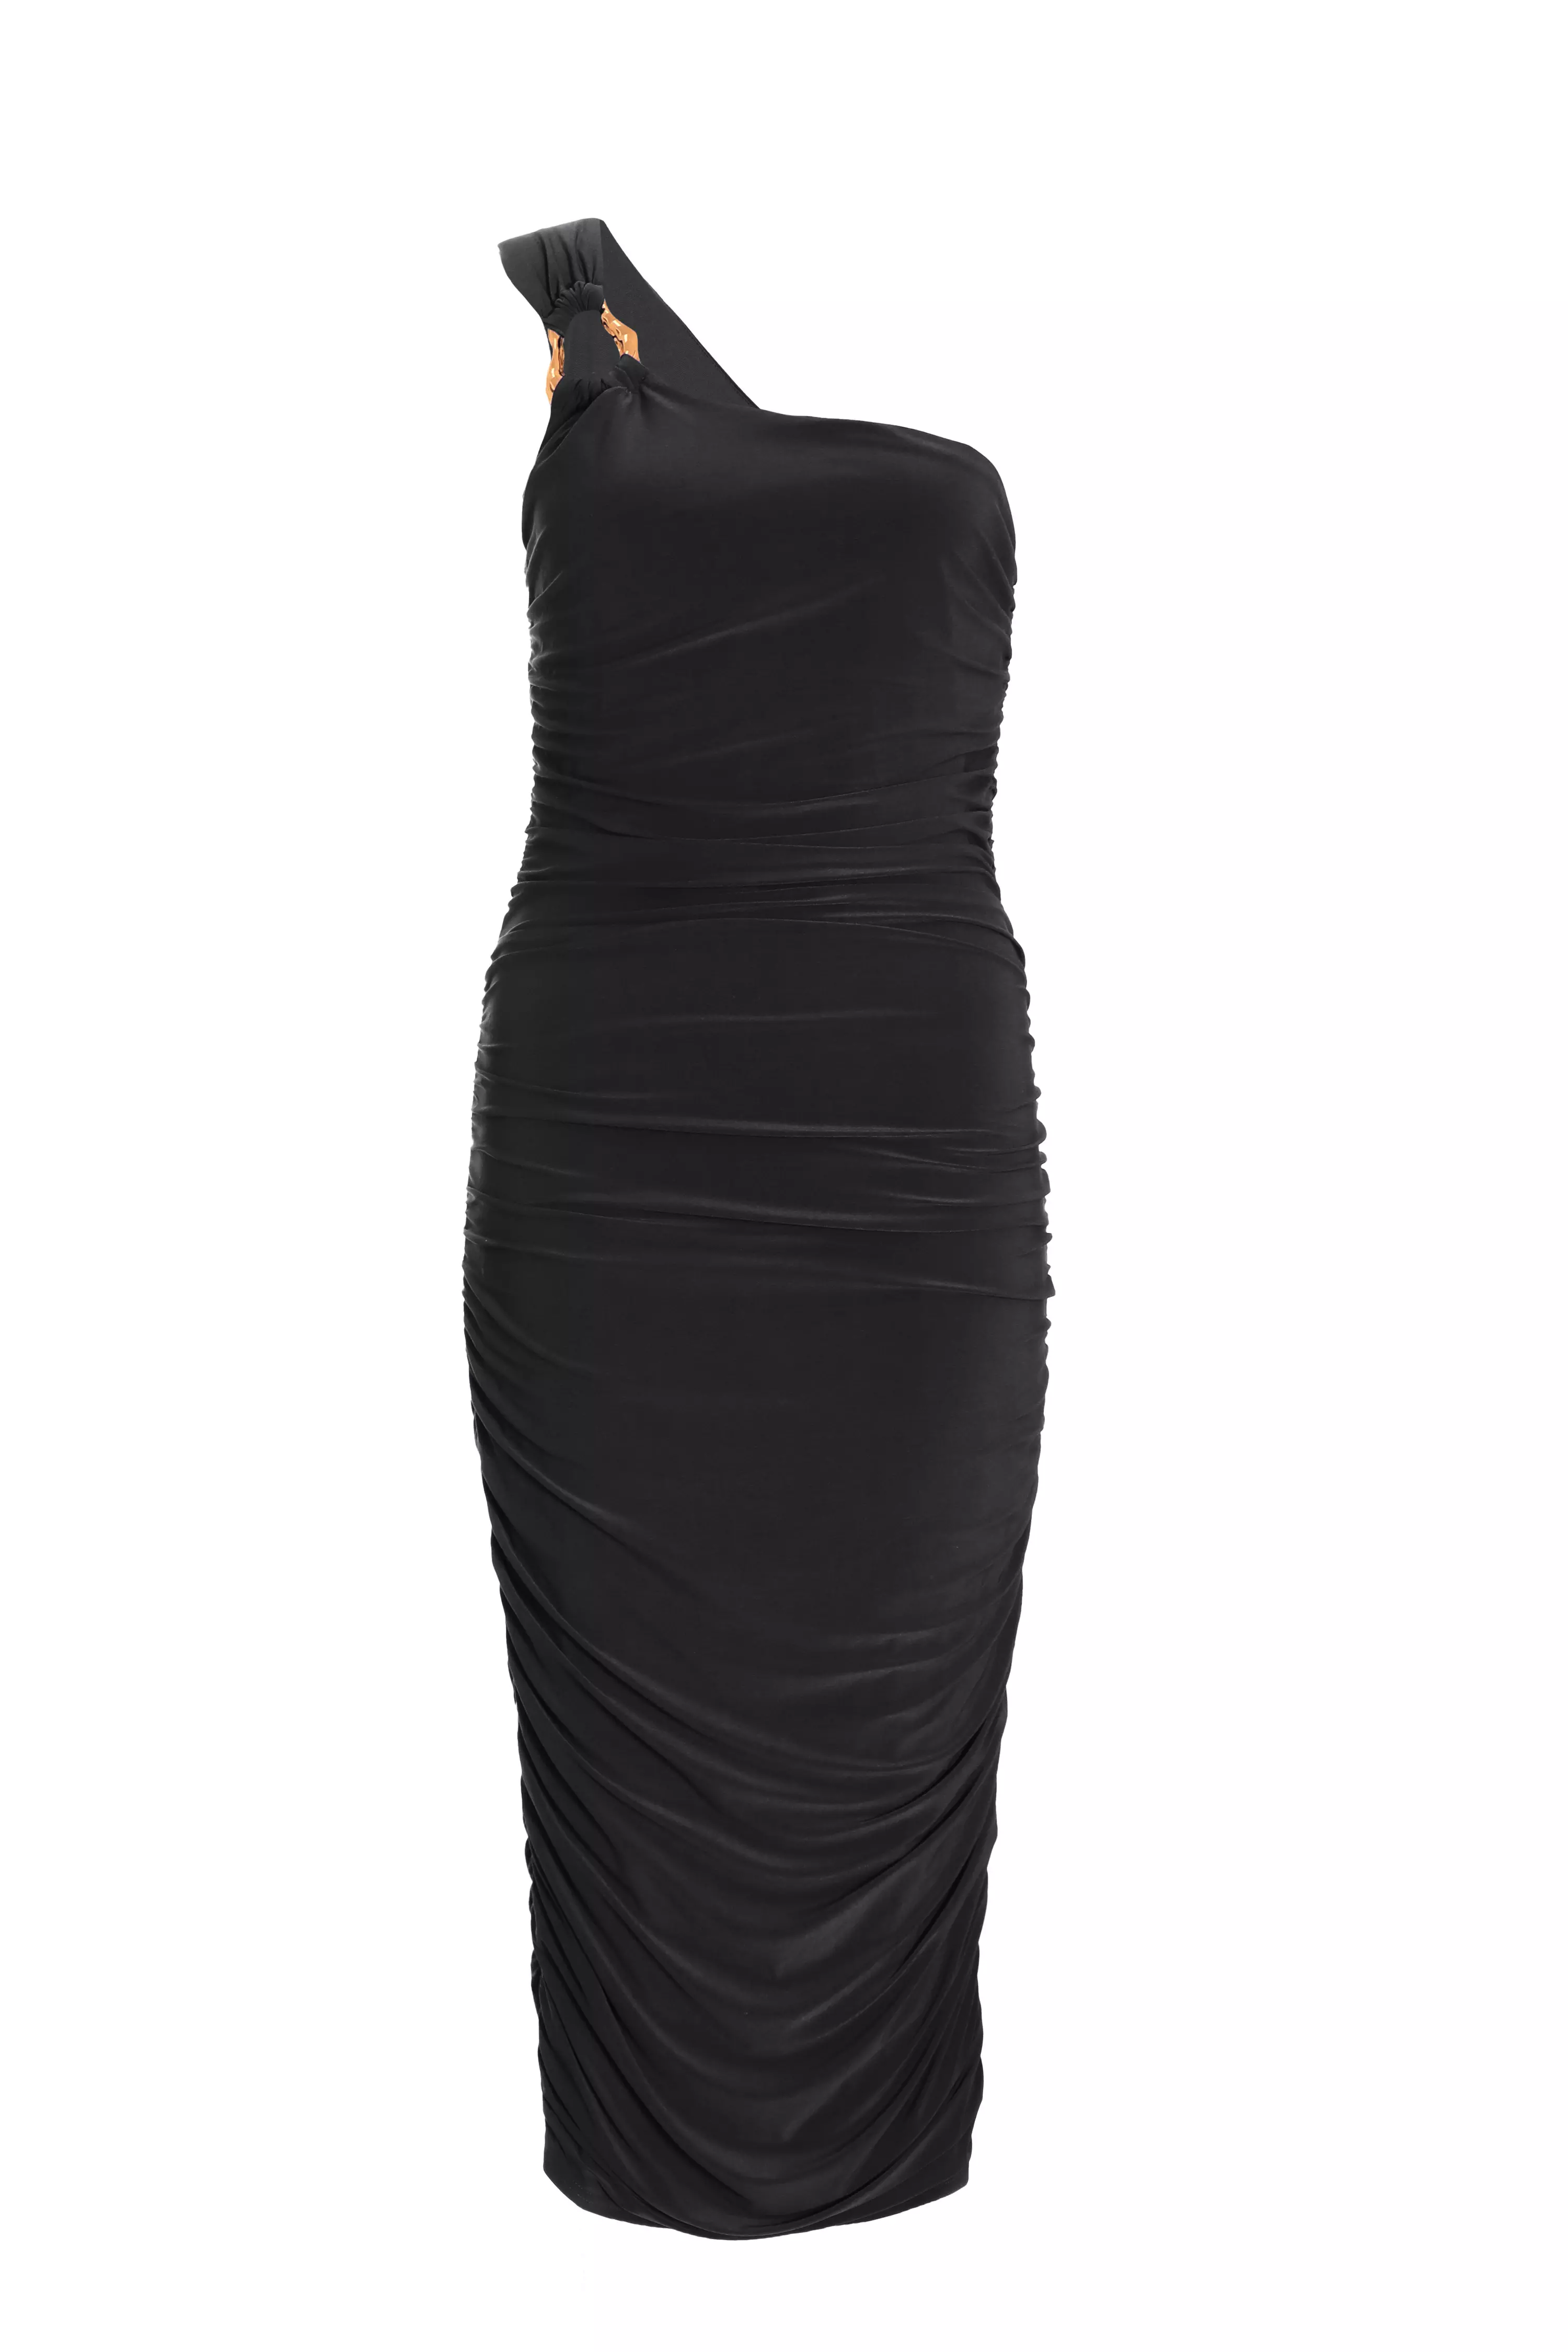 Black One Shoulder Bodycon Midi Dress - QUIZ Clothing